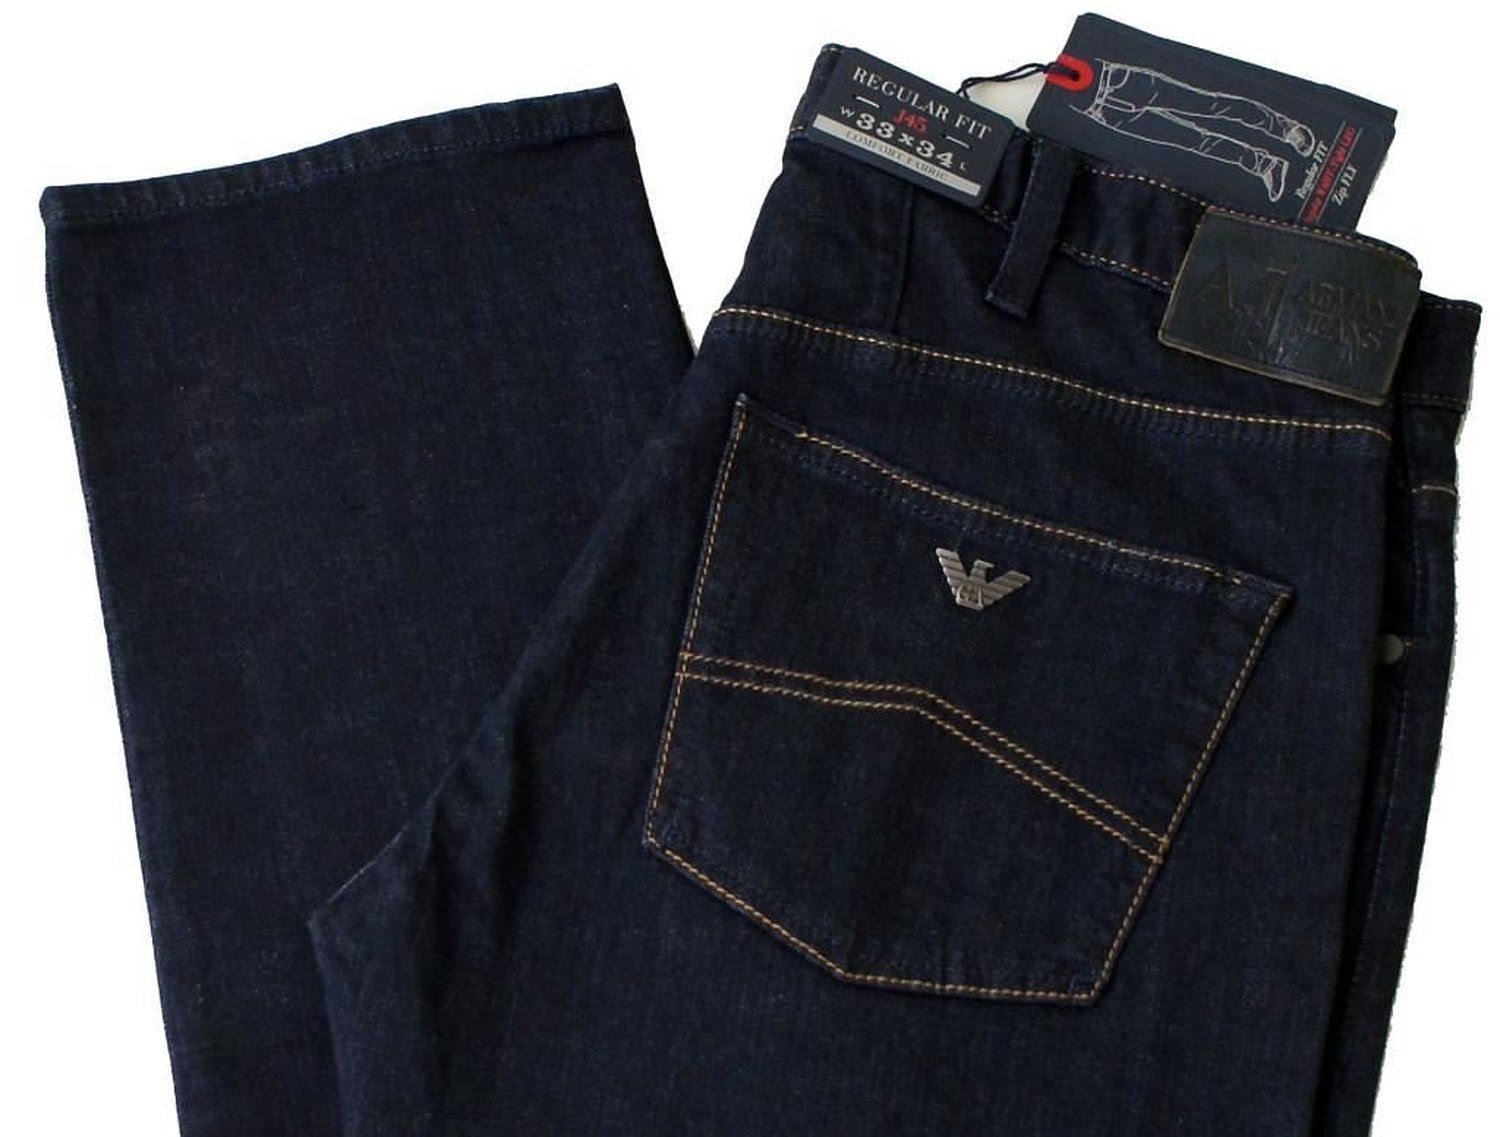 Armani Jeans - cenovo dostupná značka od Giorgio Armani